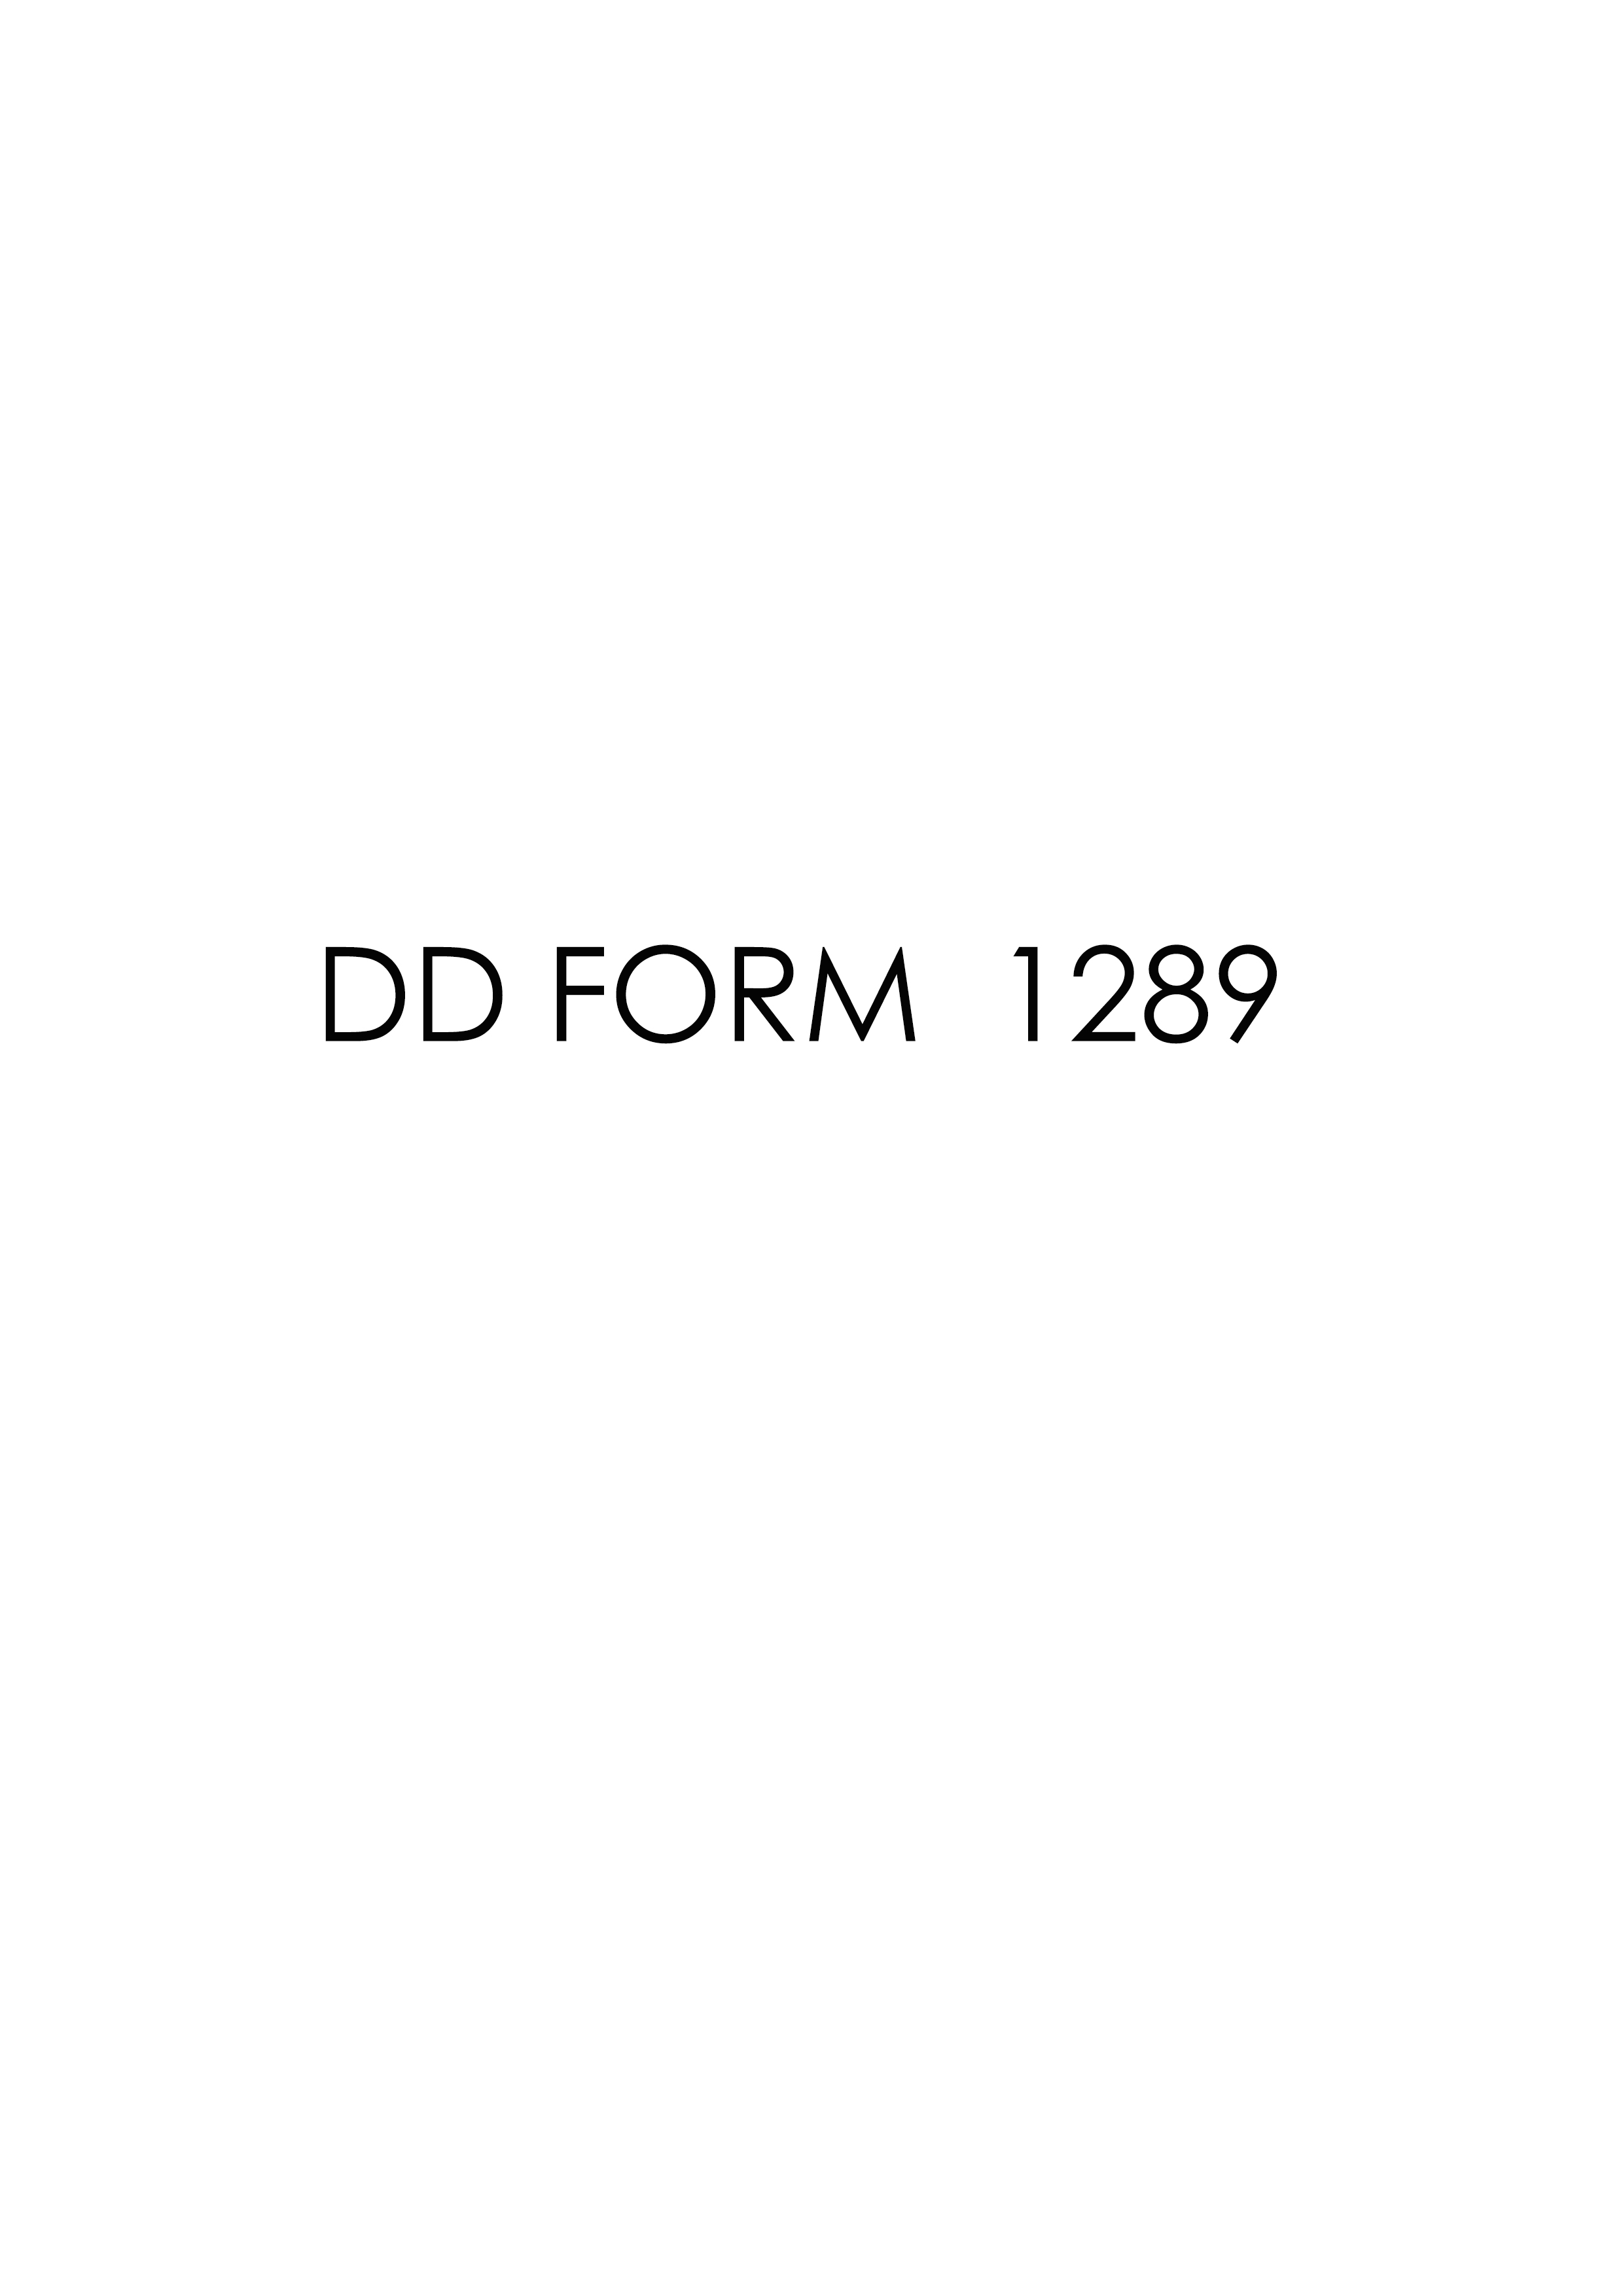 Download dd 1289 Form